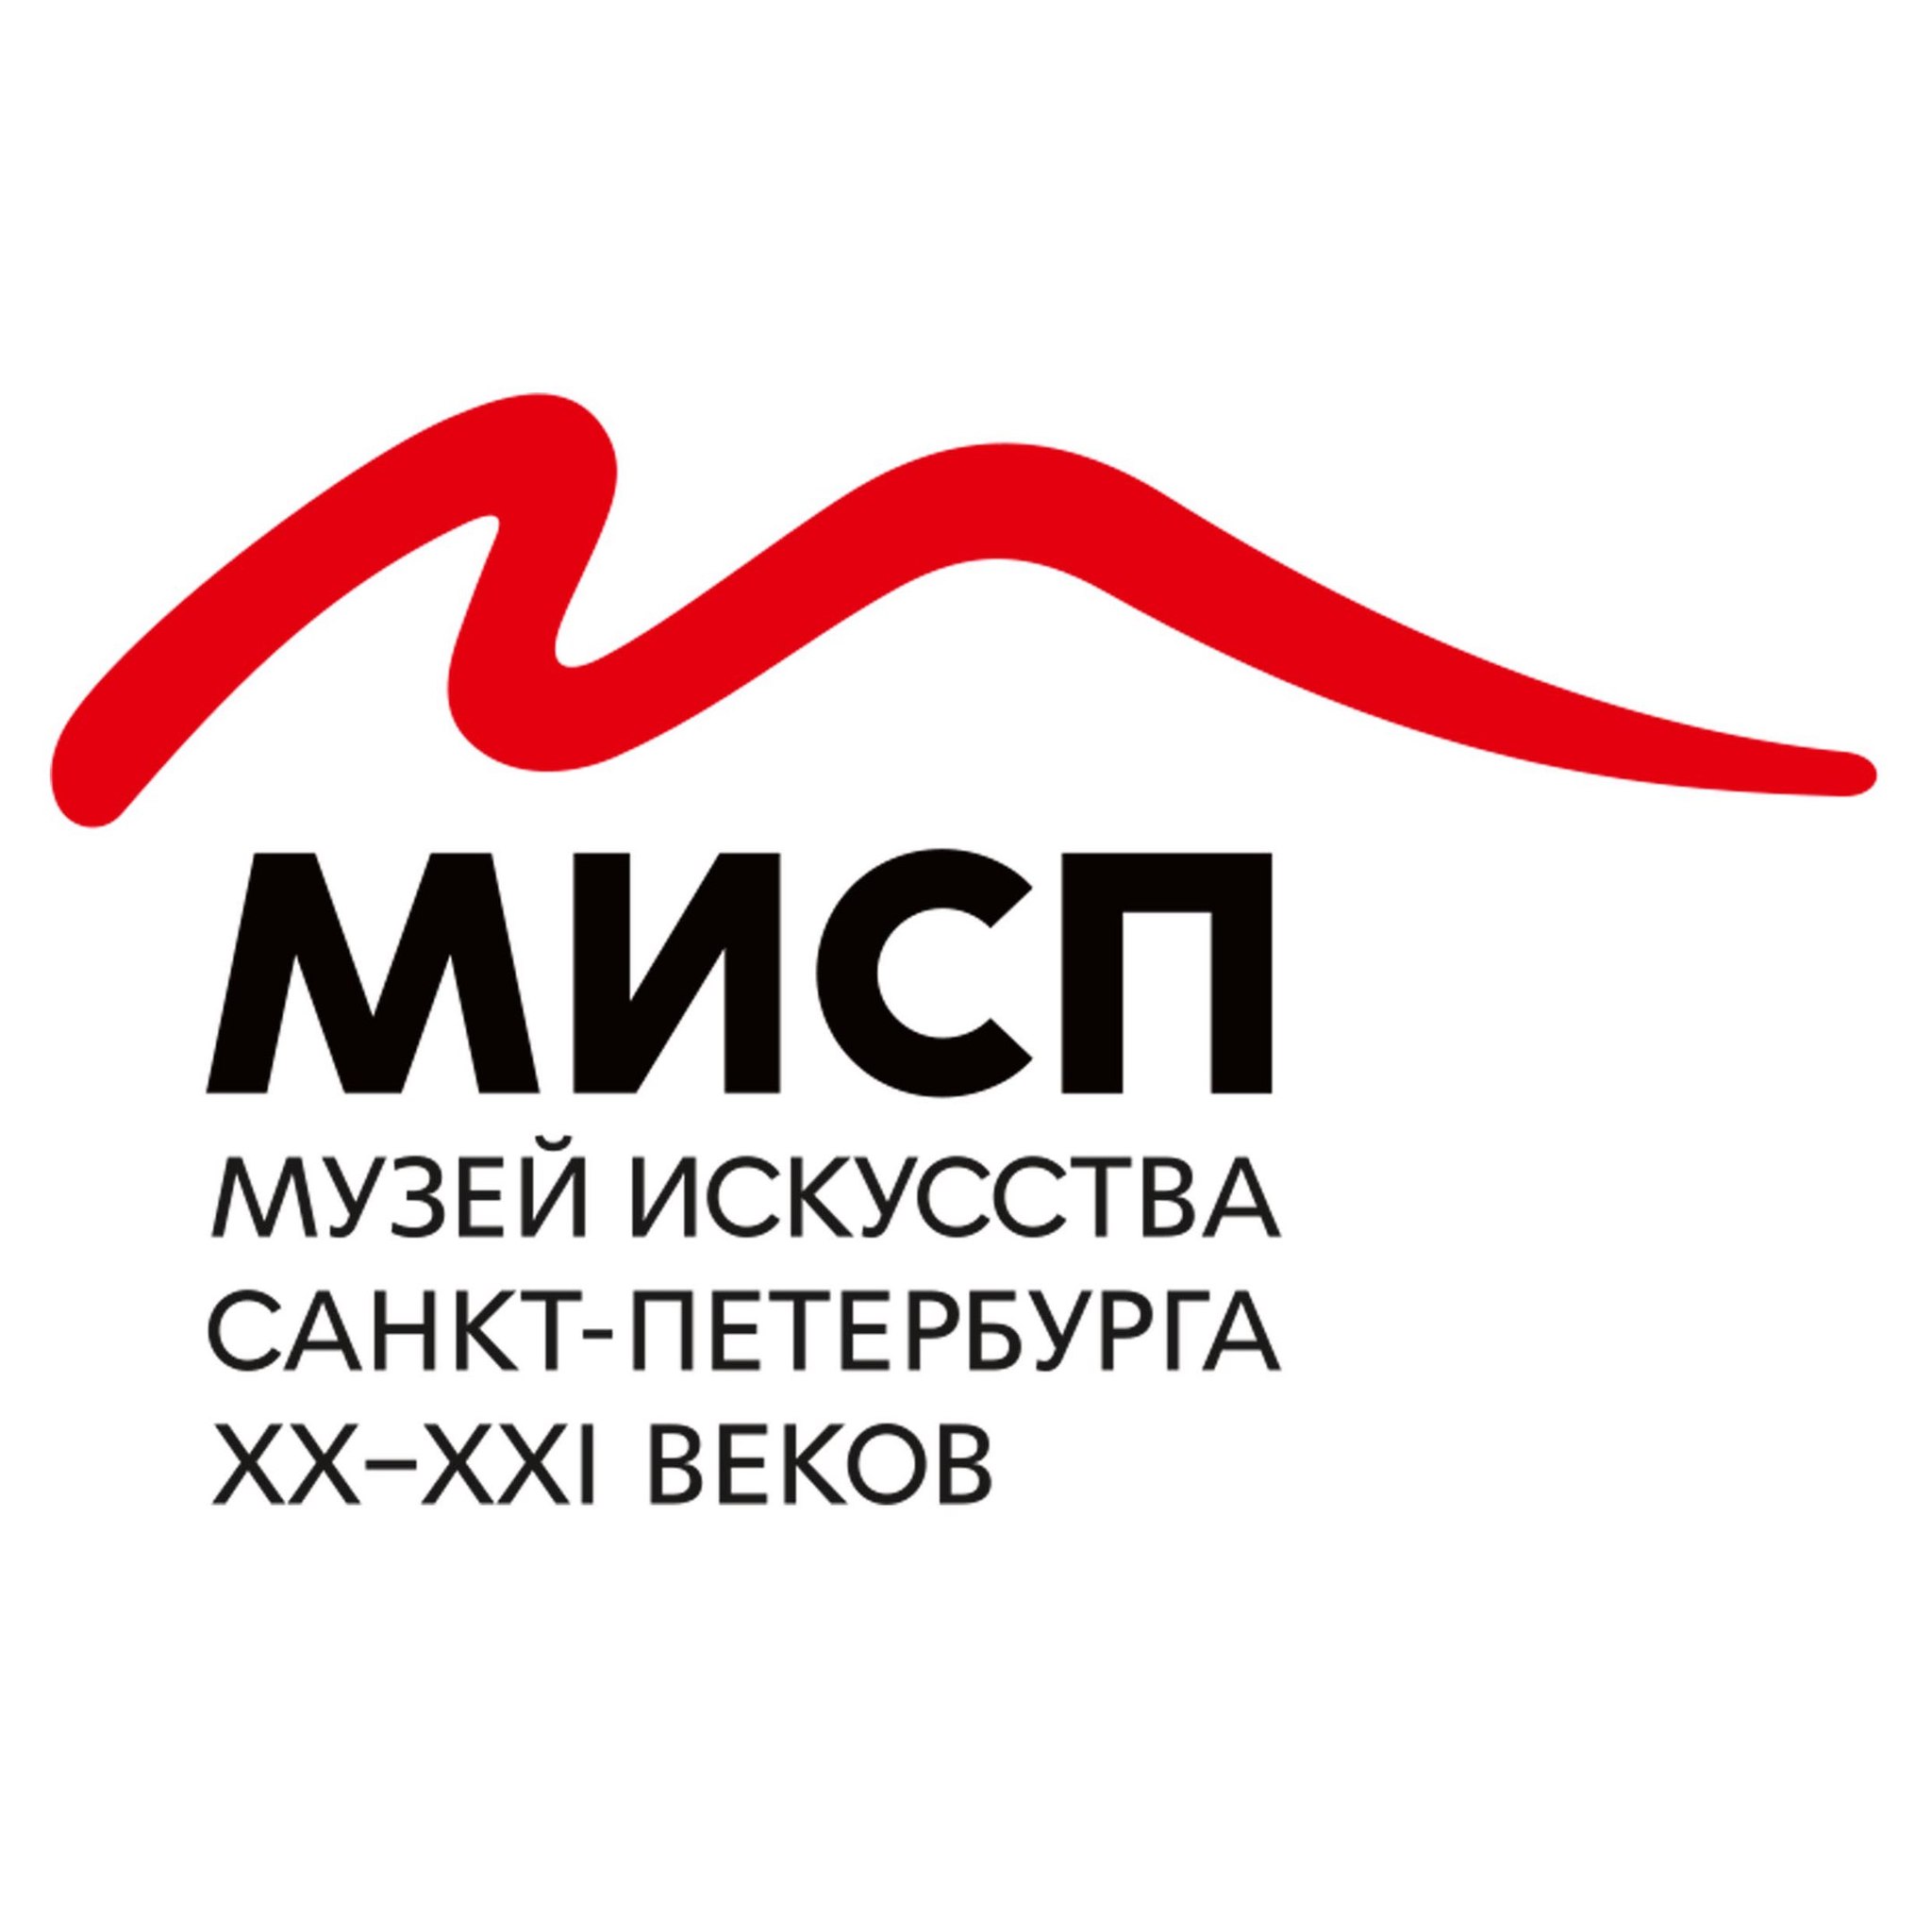 Музей искусства Санкт-Петербурга XX-XXI веков